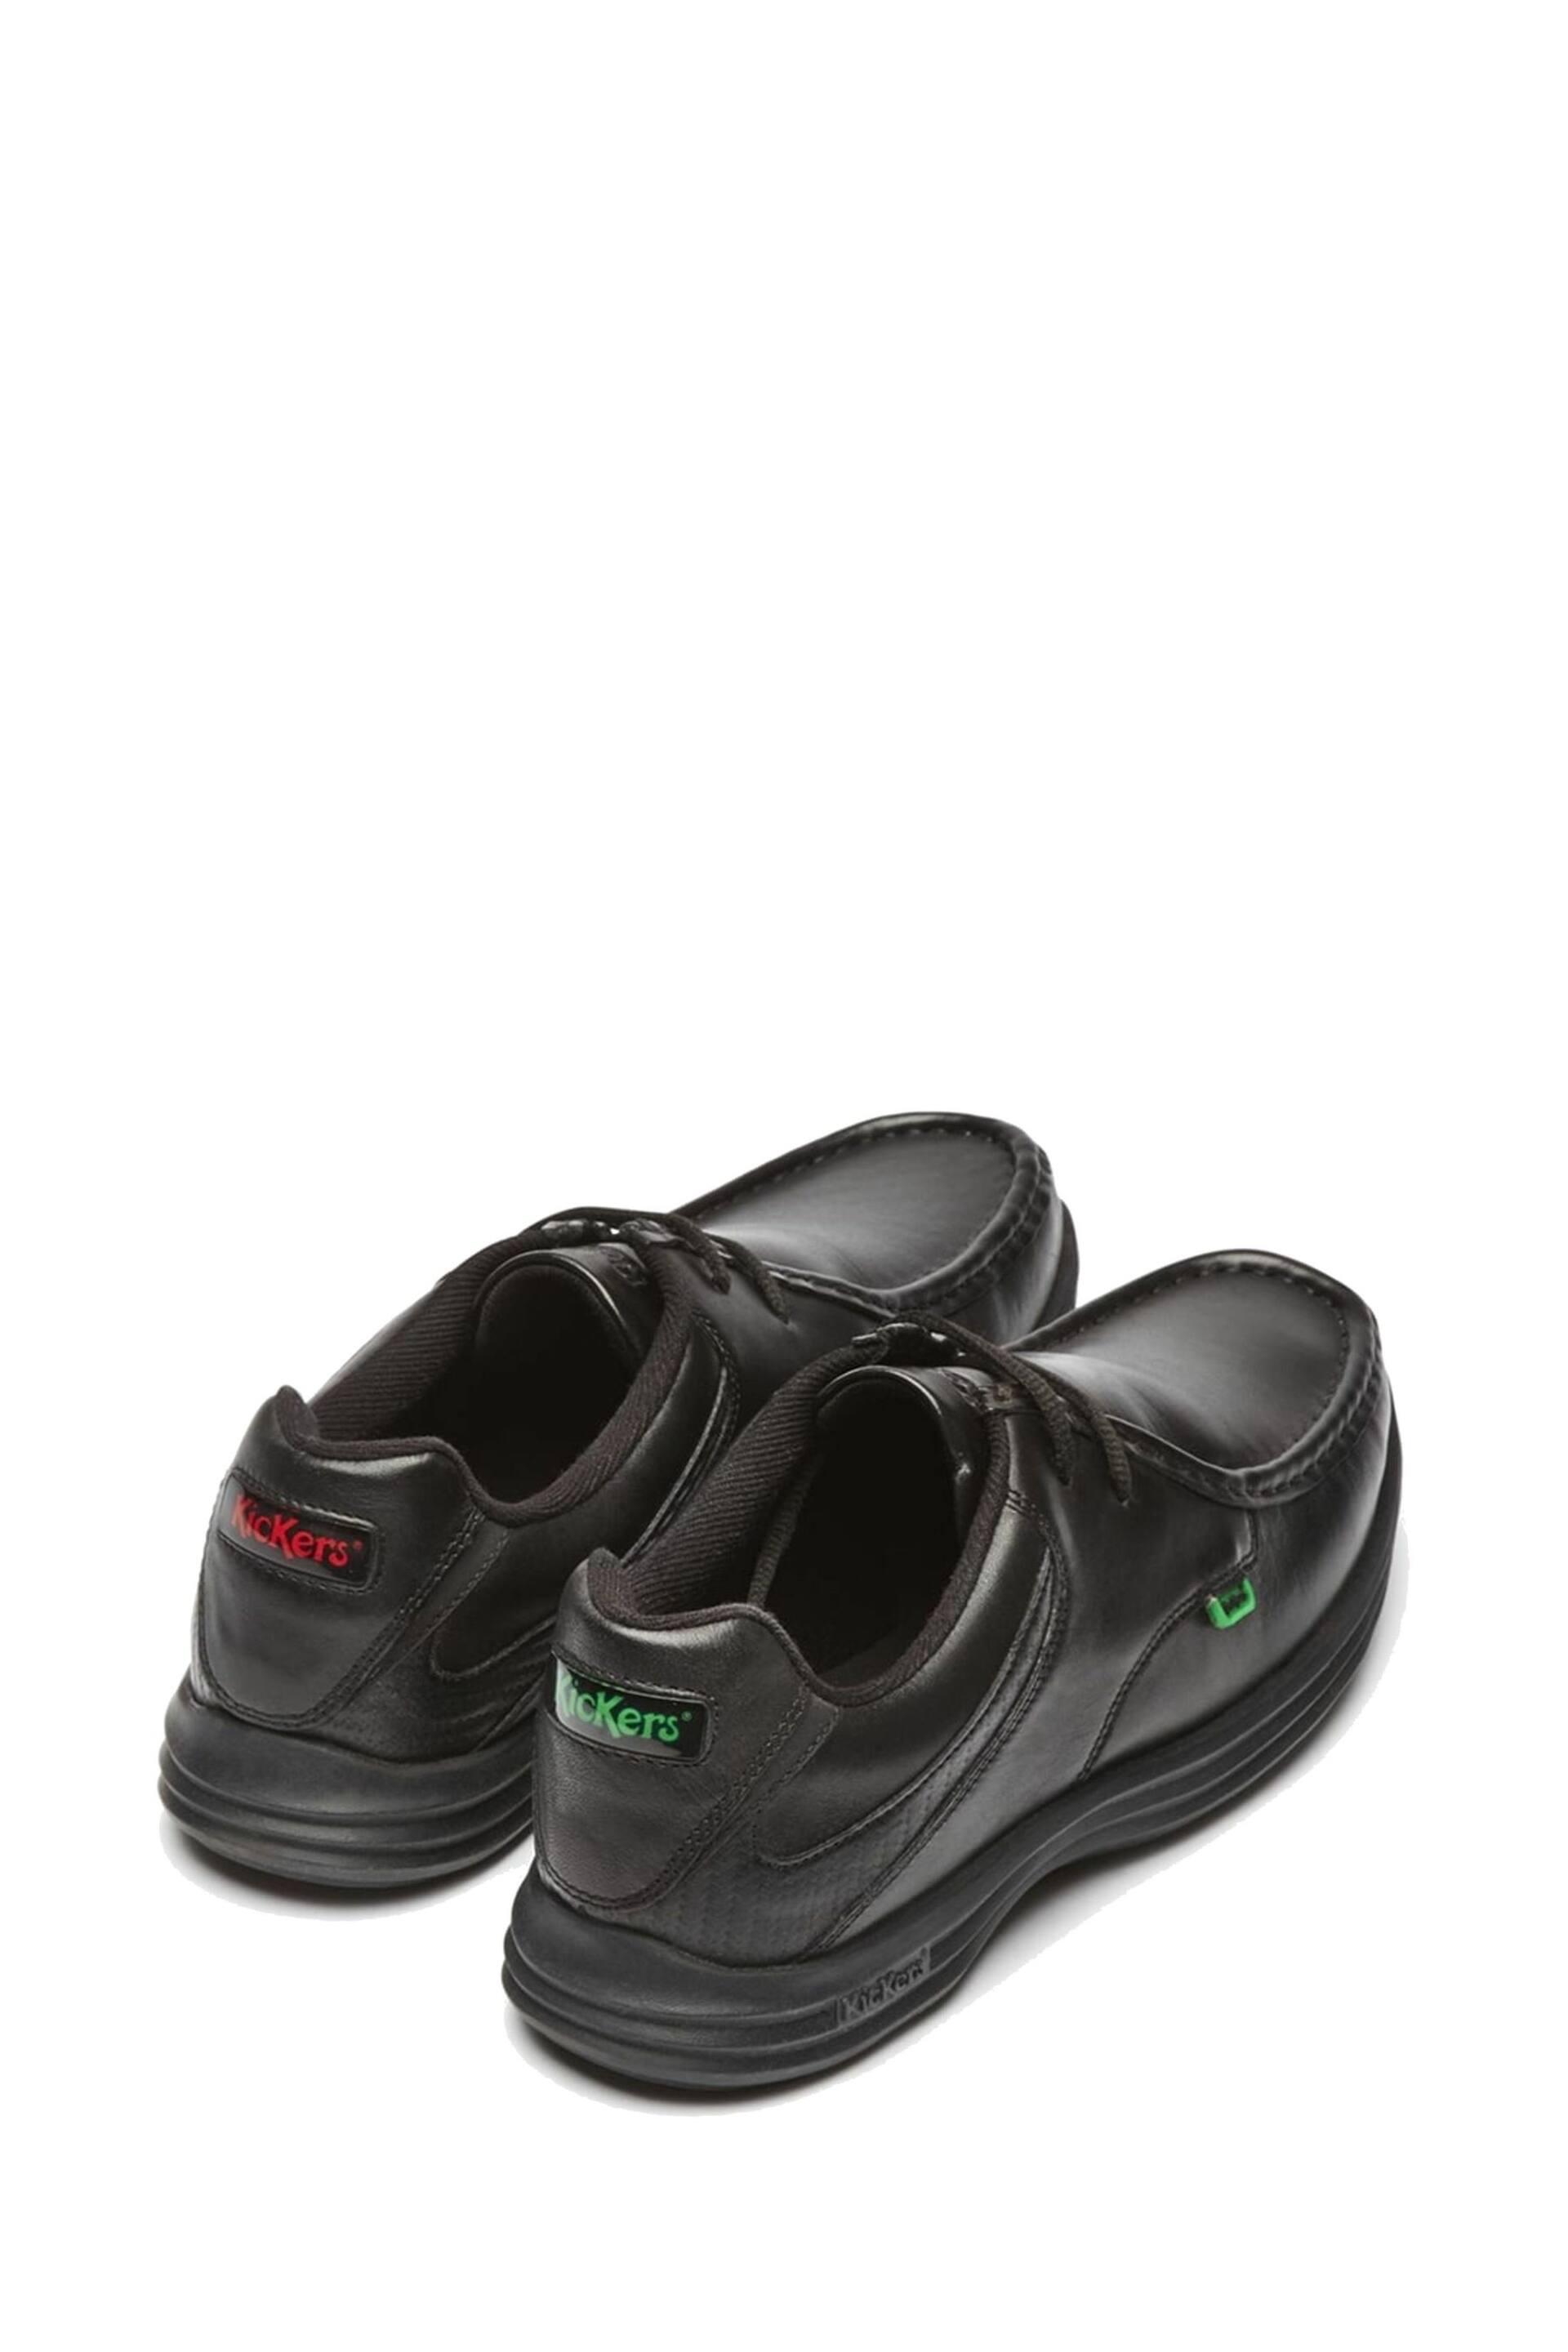 Kickers® Black Reasan Lace Shoe - Image 2 of 2